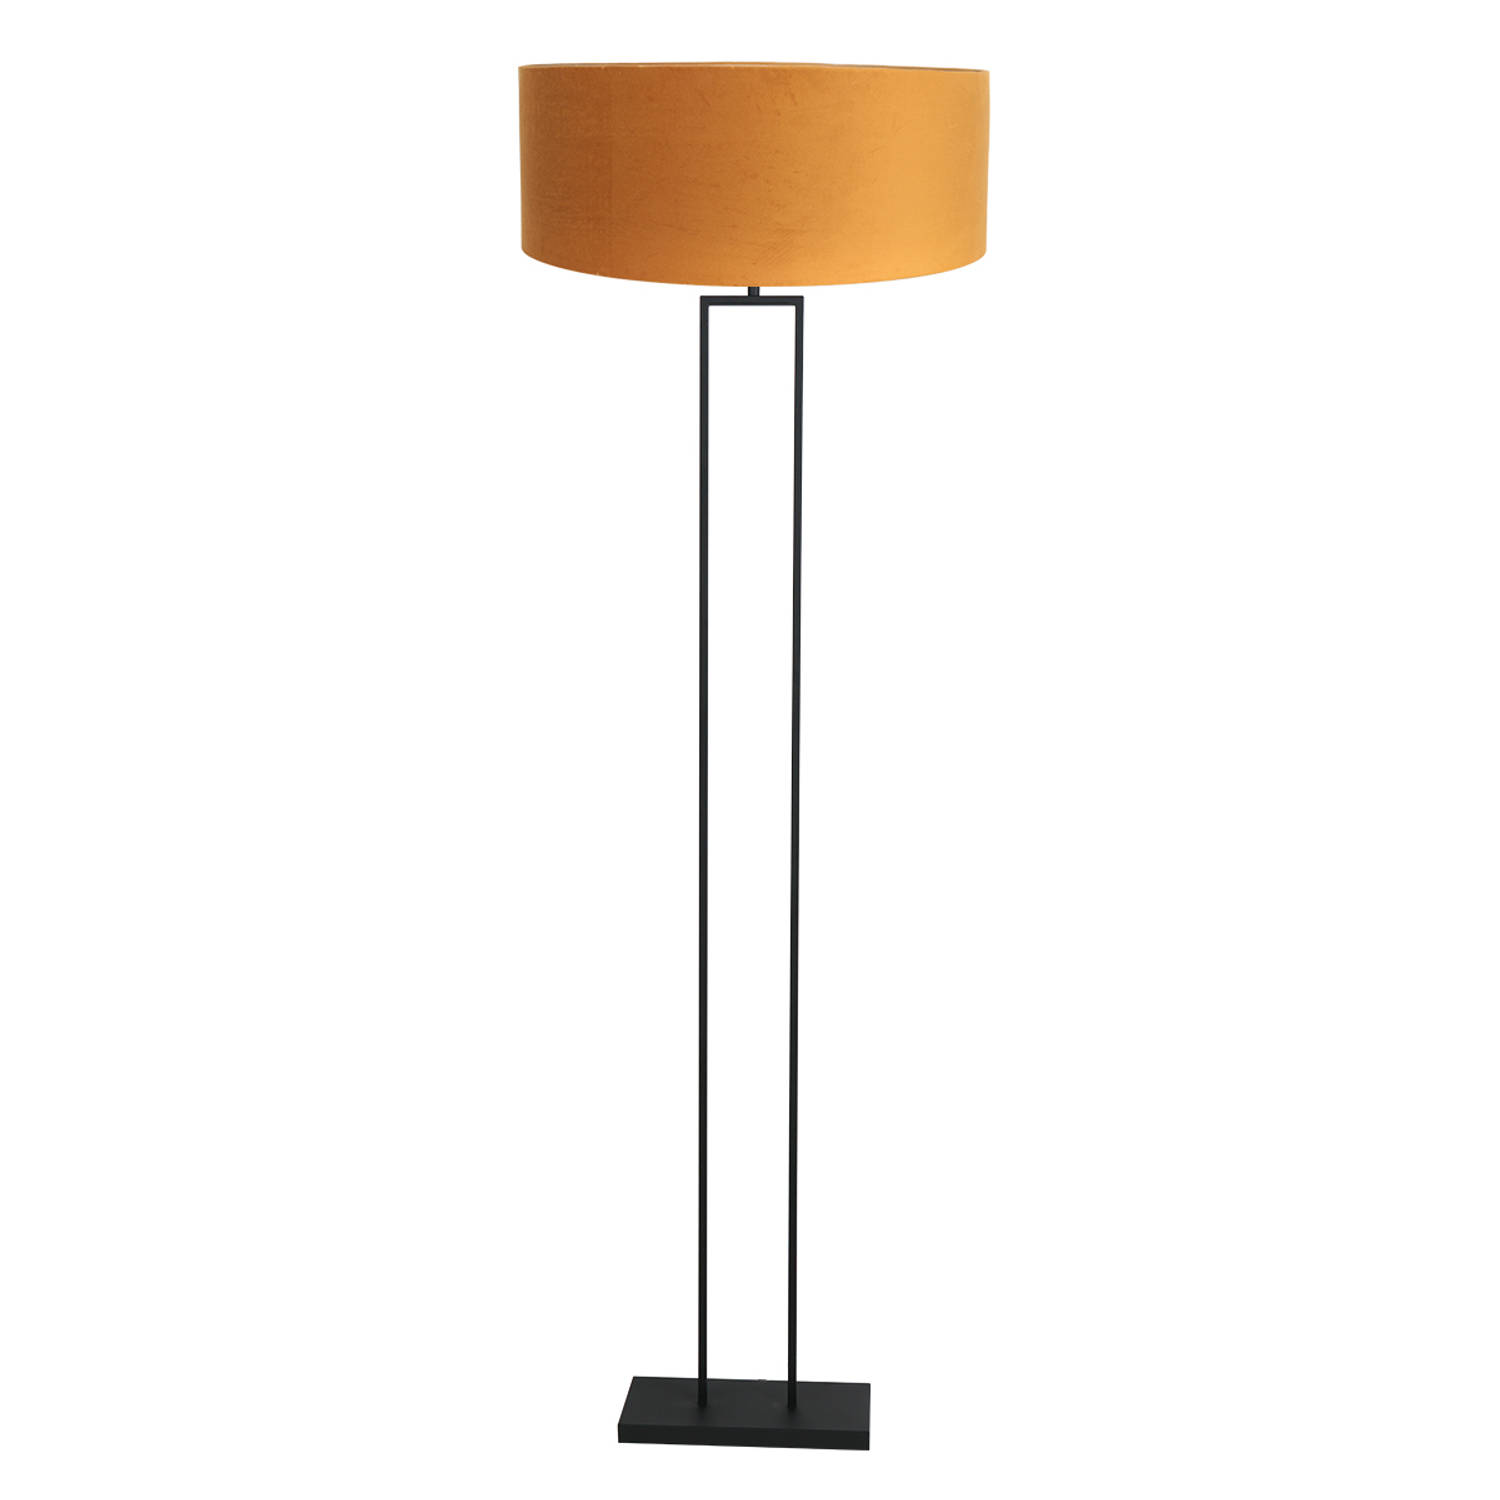 Vloerlamp Stang | 1-lichts | E27 fitting | goud & zwart | modern / industrieel ontwerp | woonkamer / studeerkamer | Ø 25 cm | staande lamp